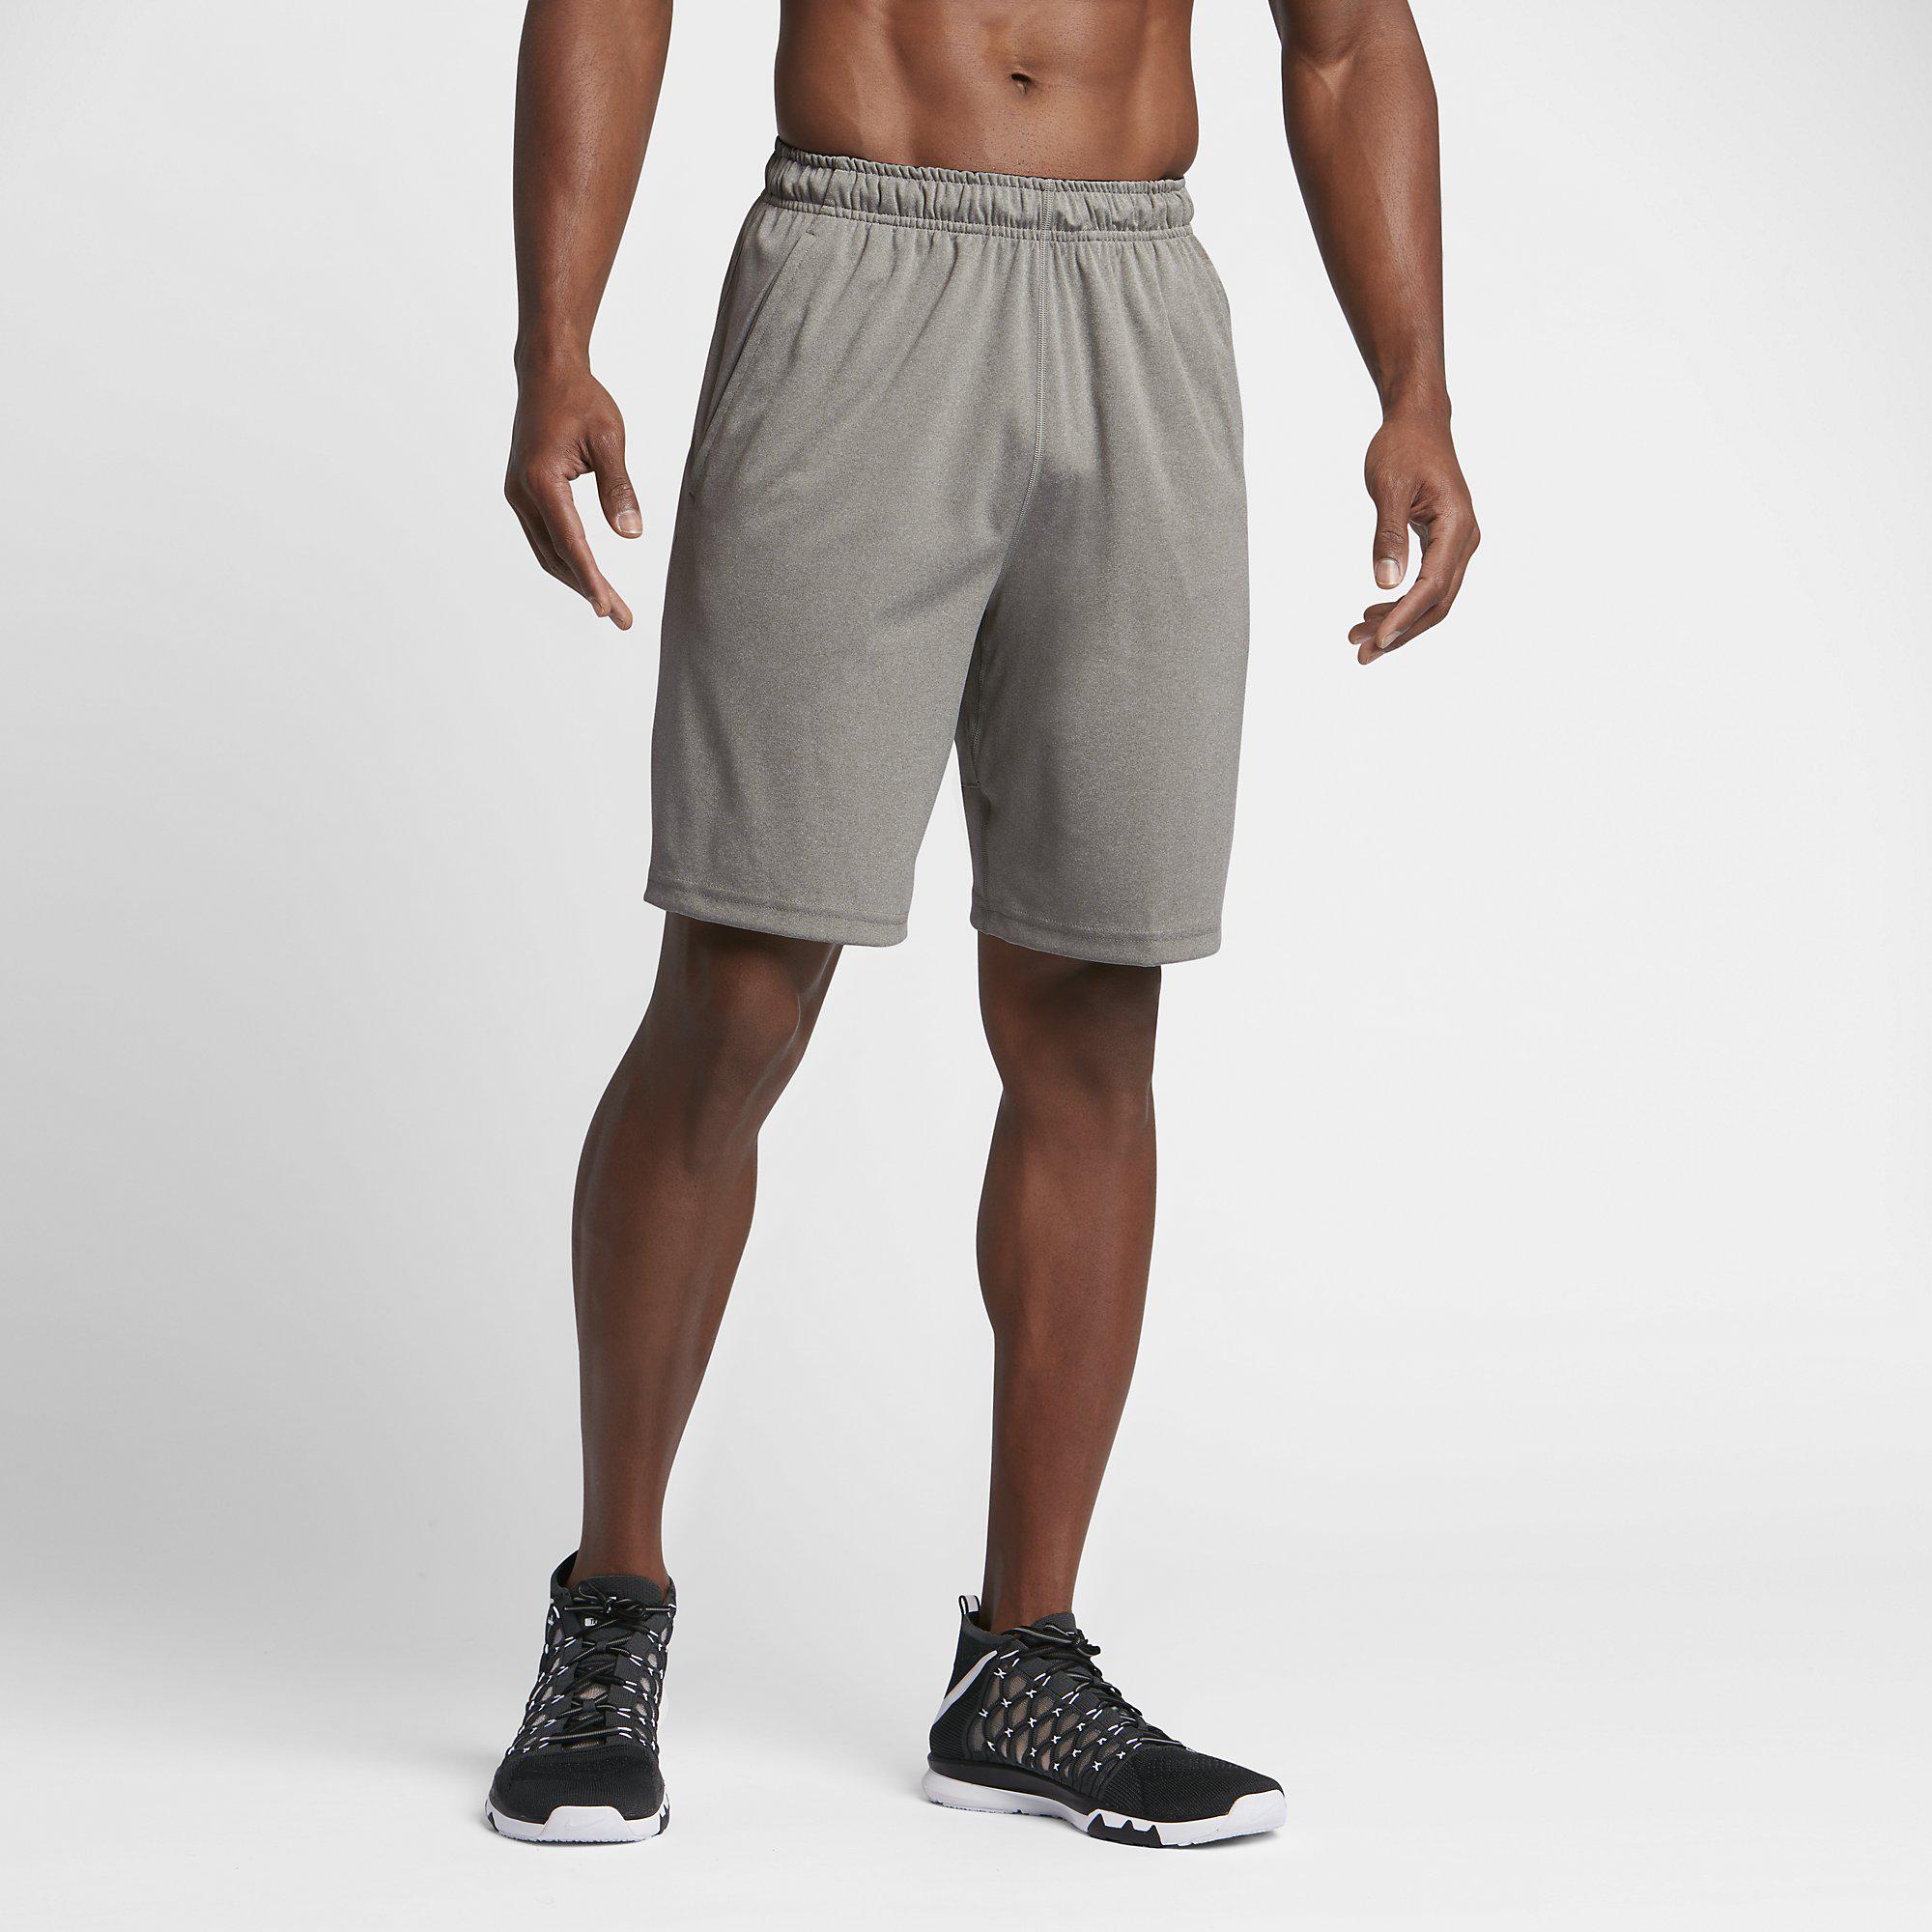 Nike Mens Dry Training Shorts - Dark Grey - Tennisnuts.com